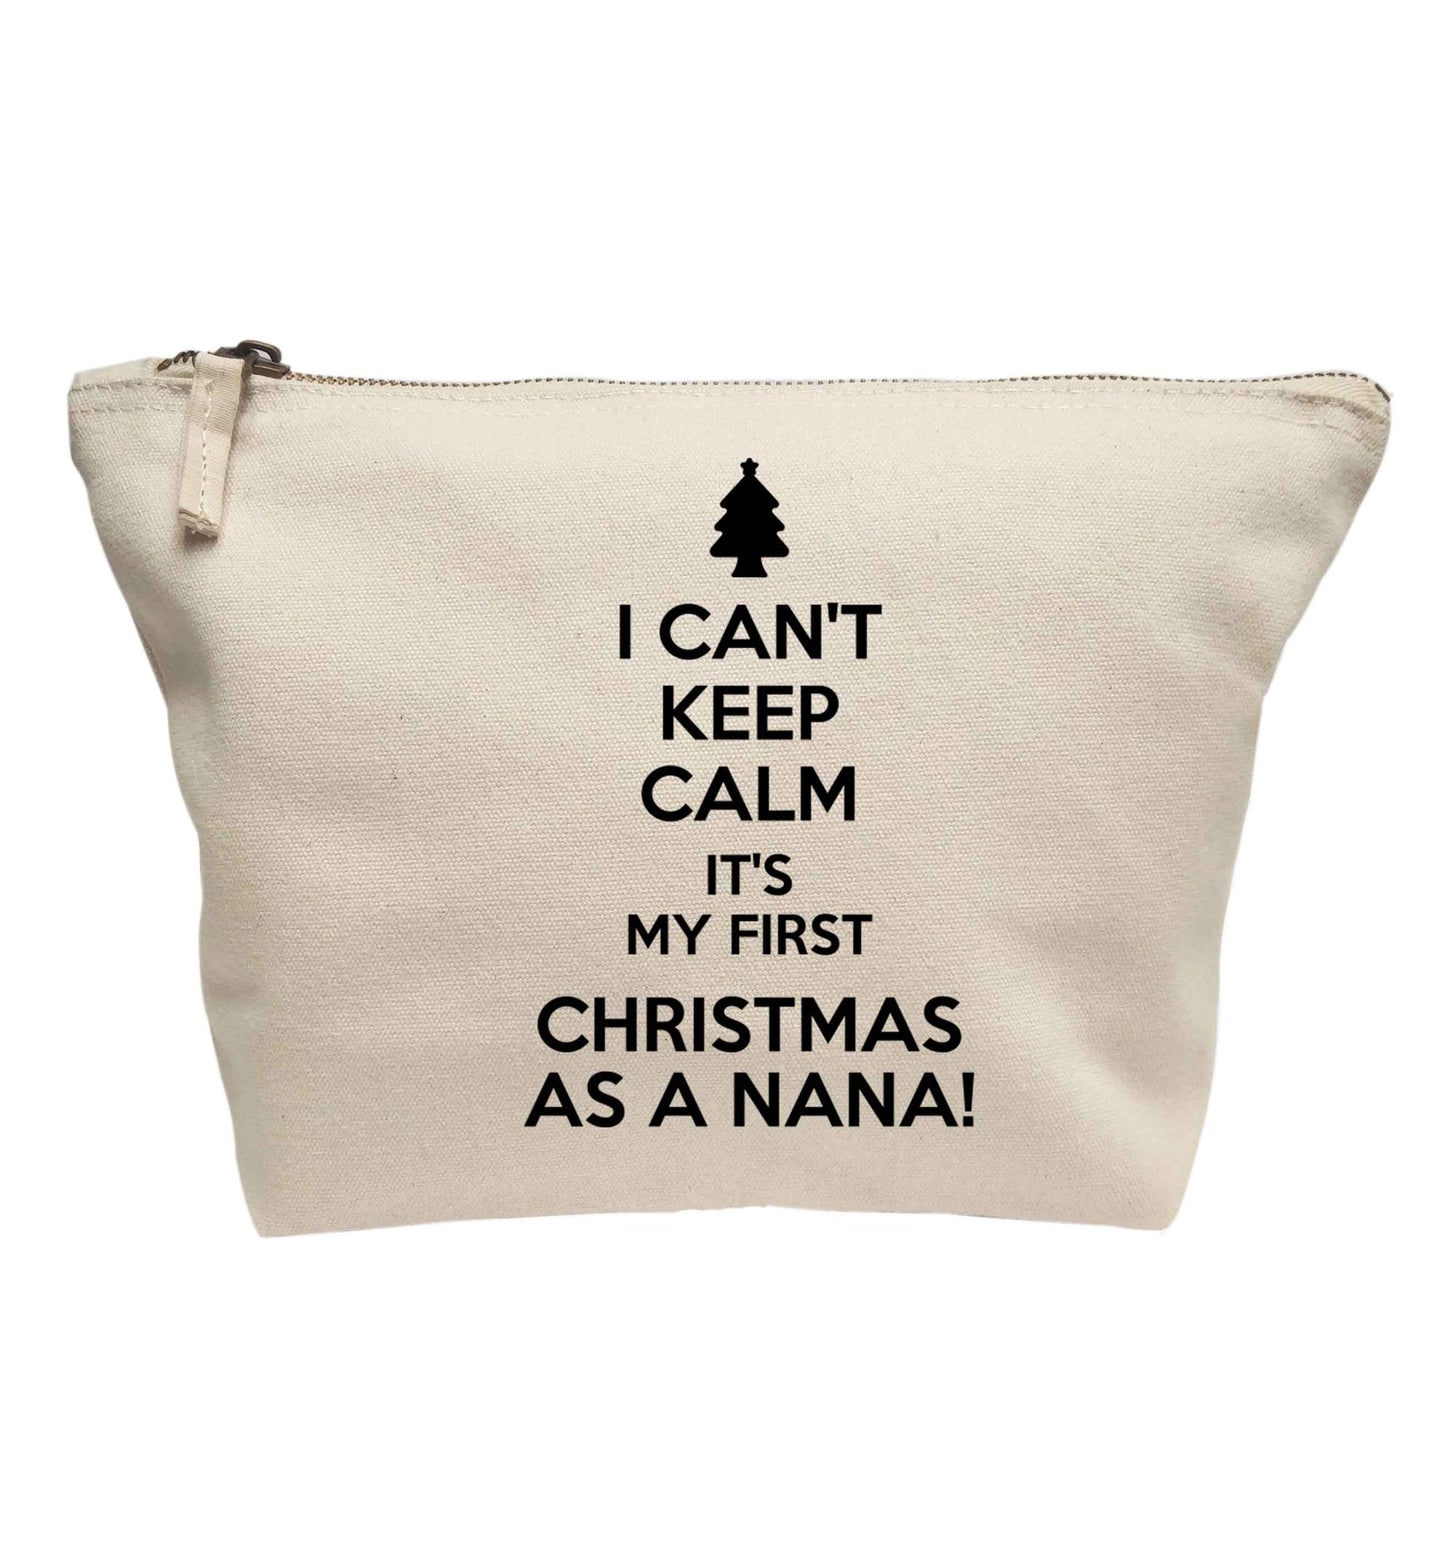 I can't keep calm it's my first Christmas as a nana! | makeup / wash bag